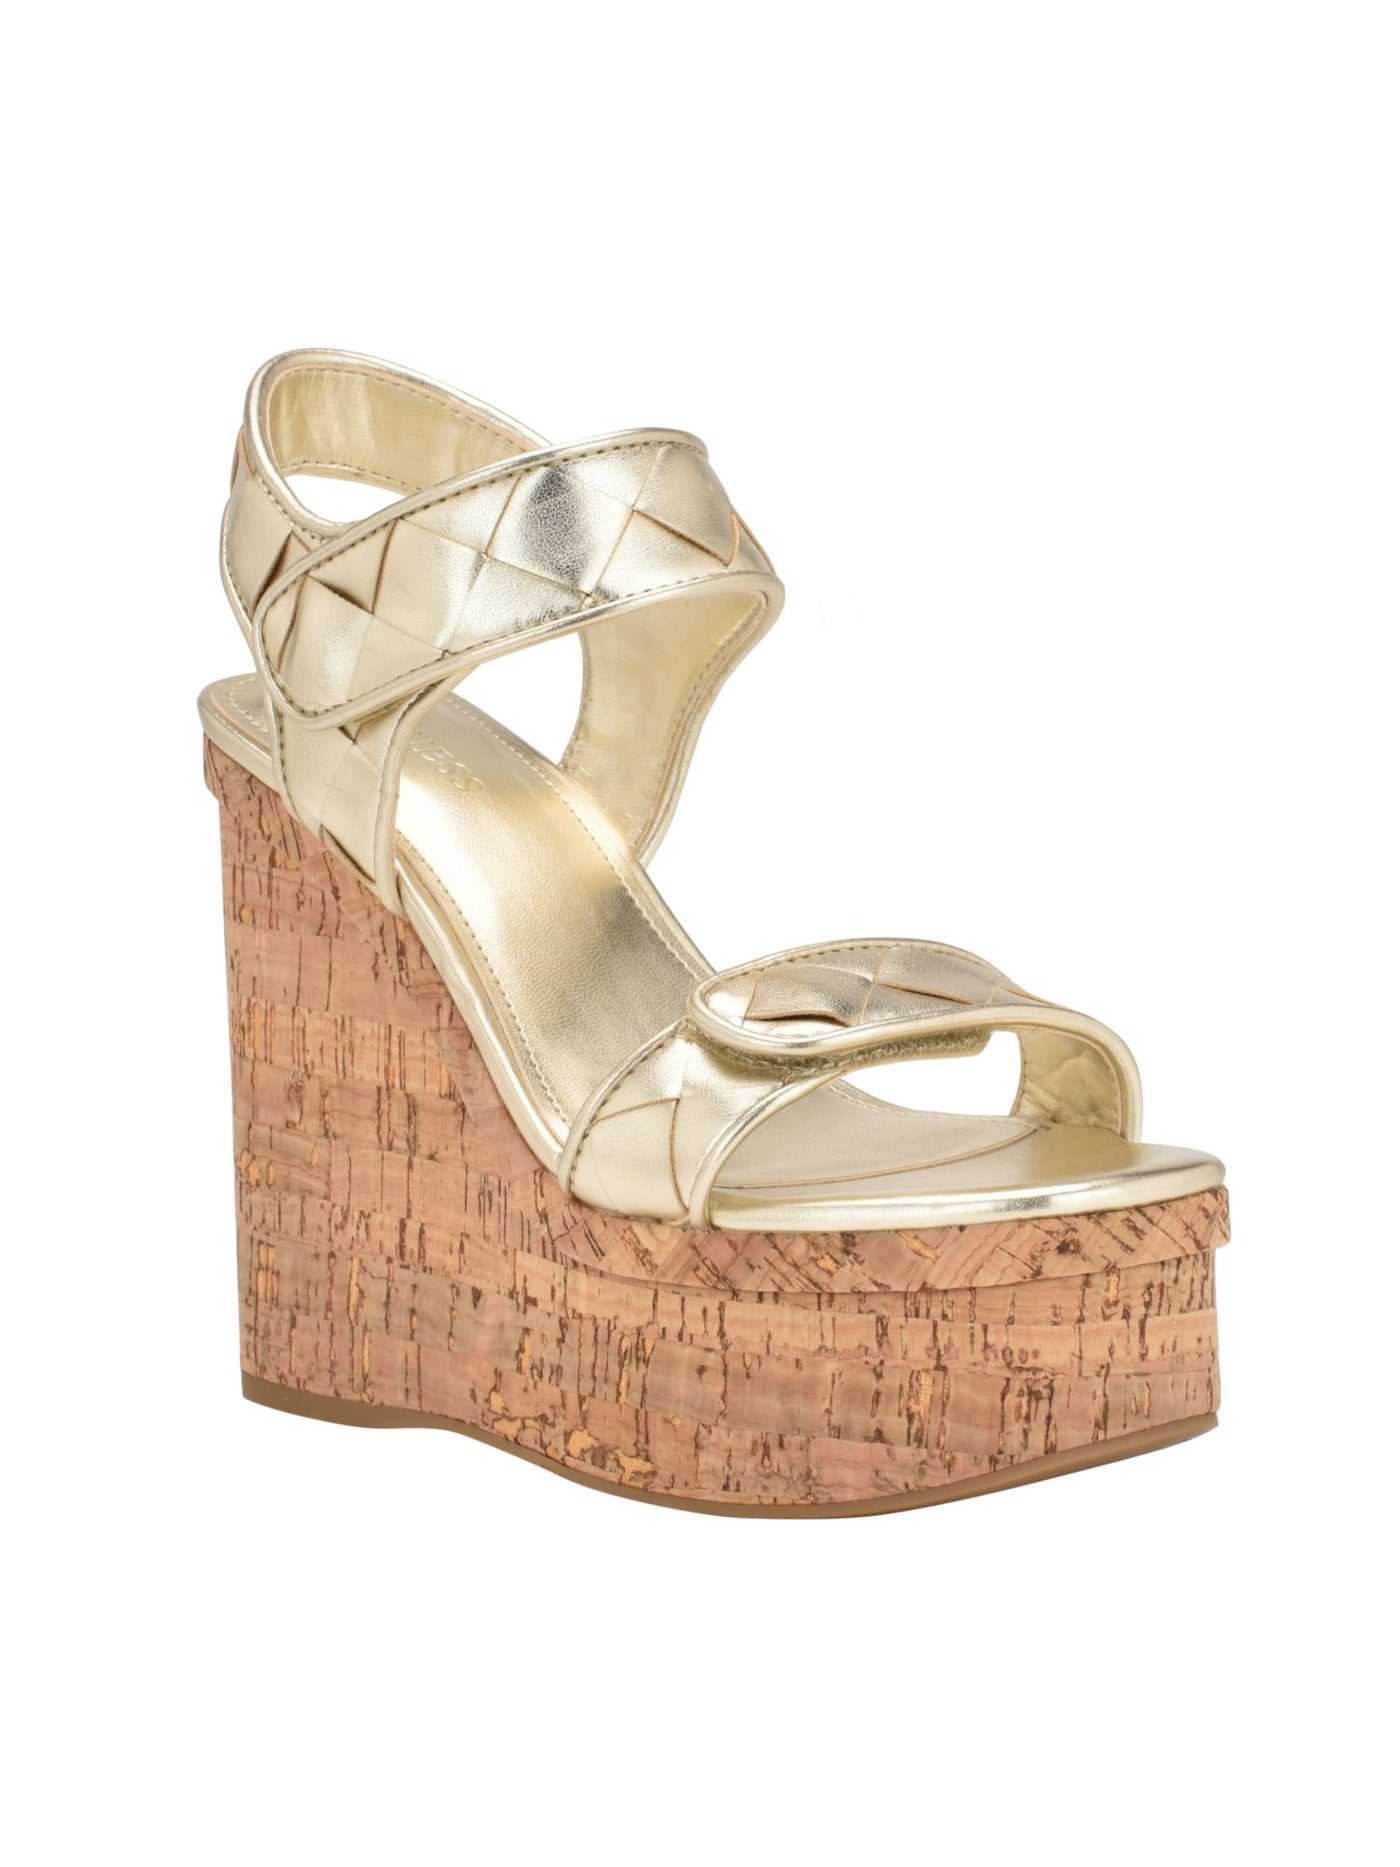 GUESS Womens Gold Cork Metallic Padded Cataline Square Toe Wedge Slingback Sandal 8.5 M